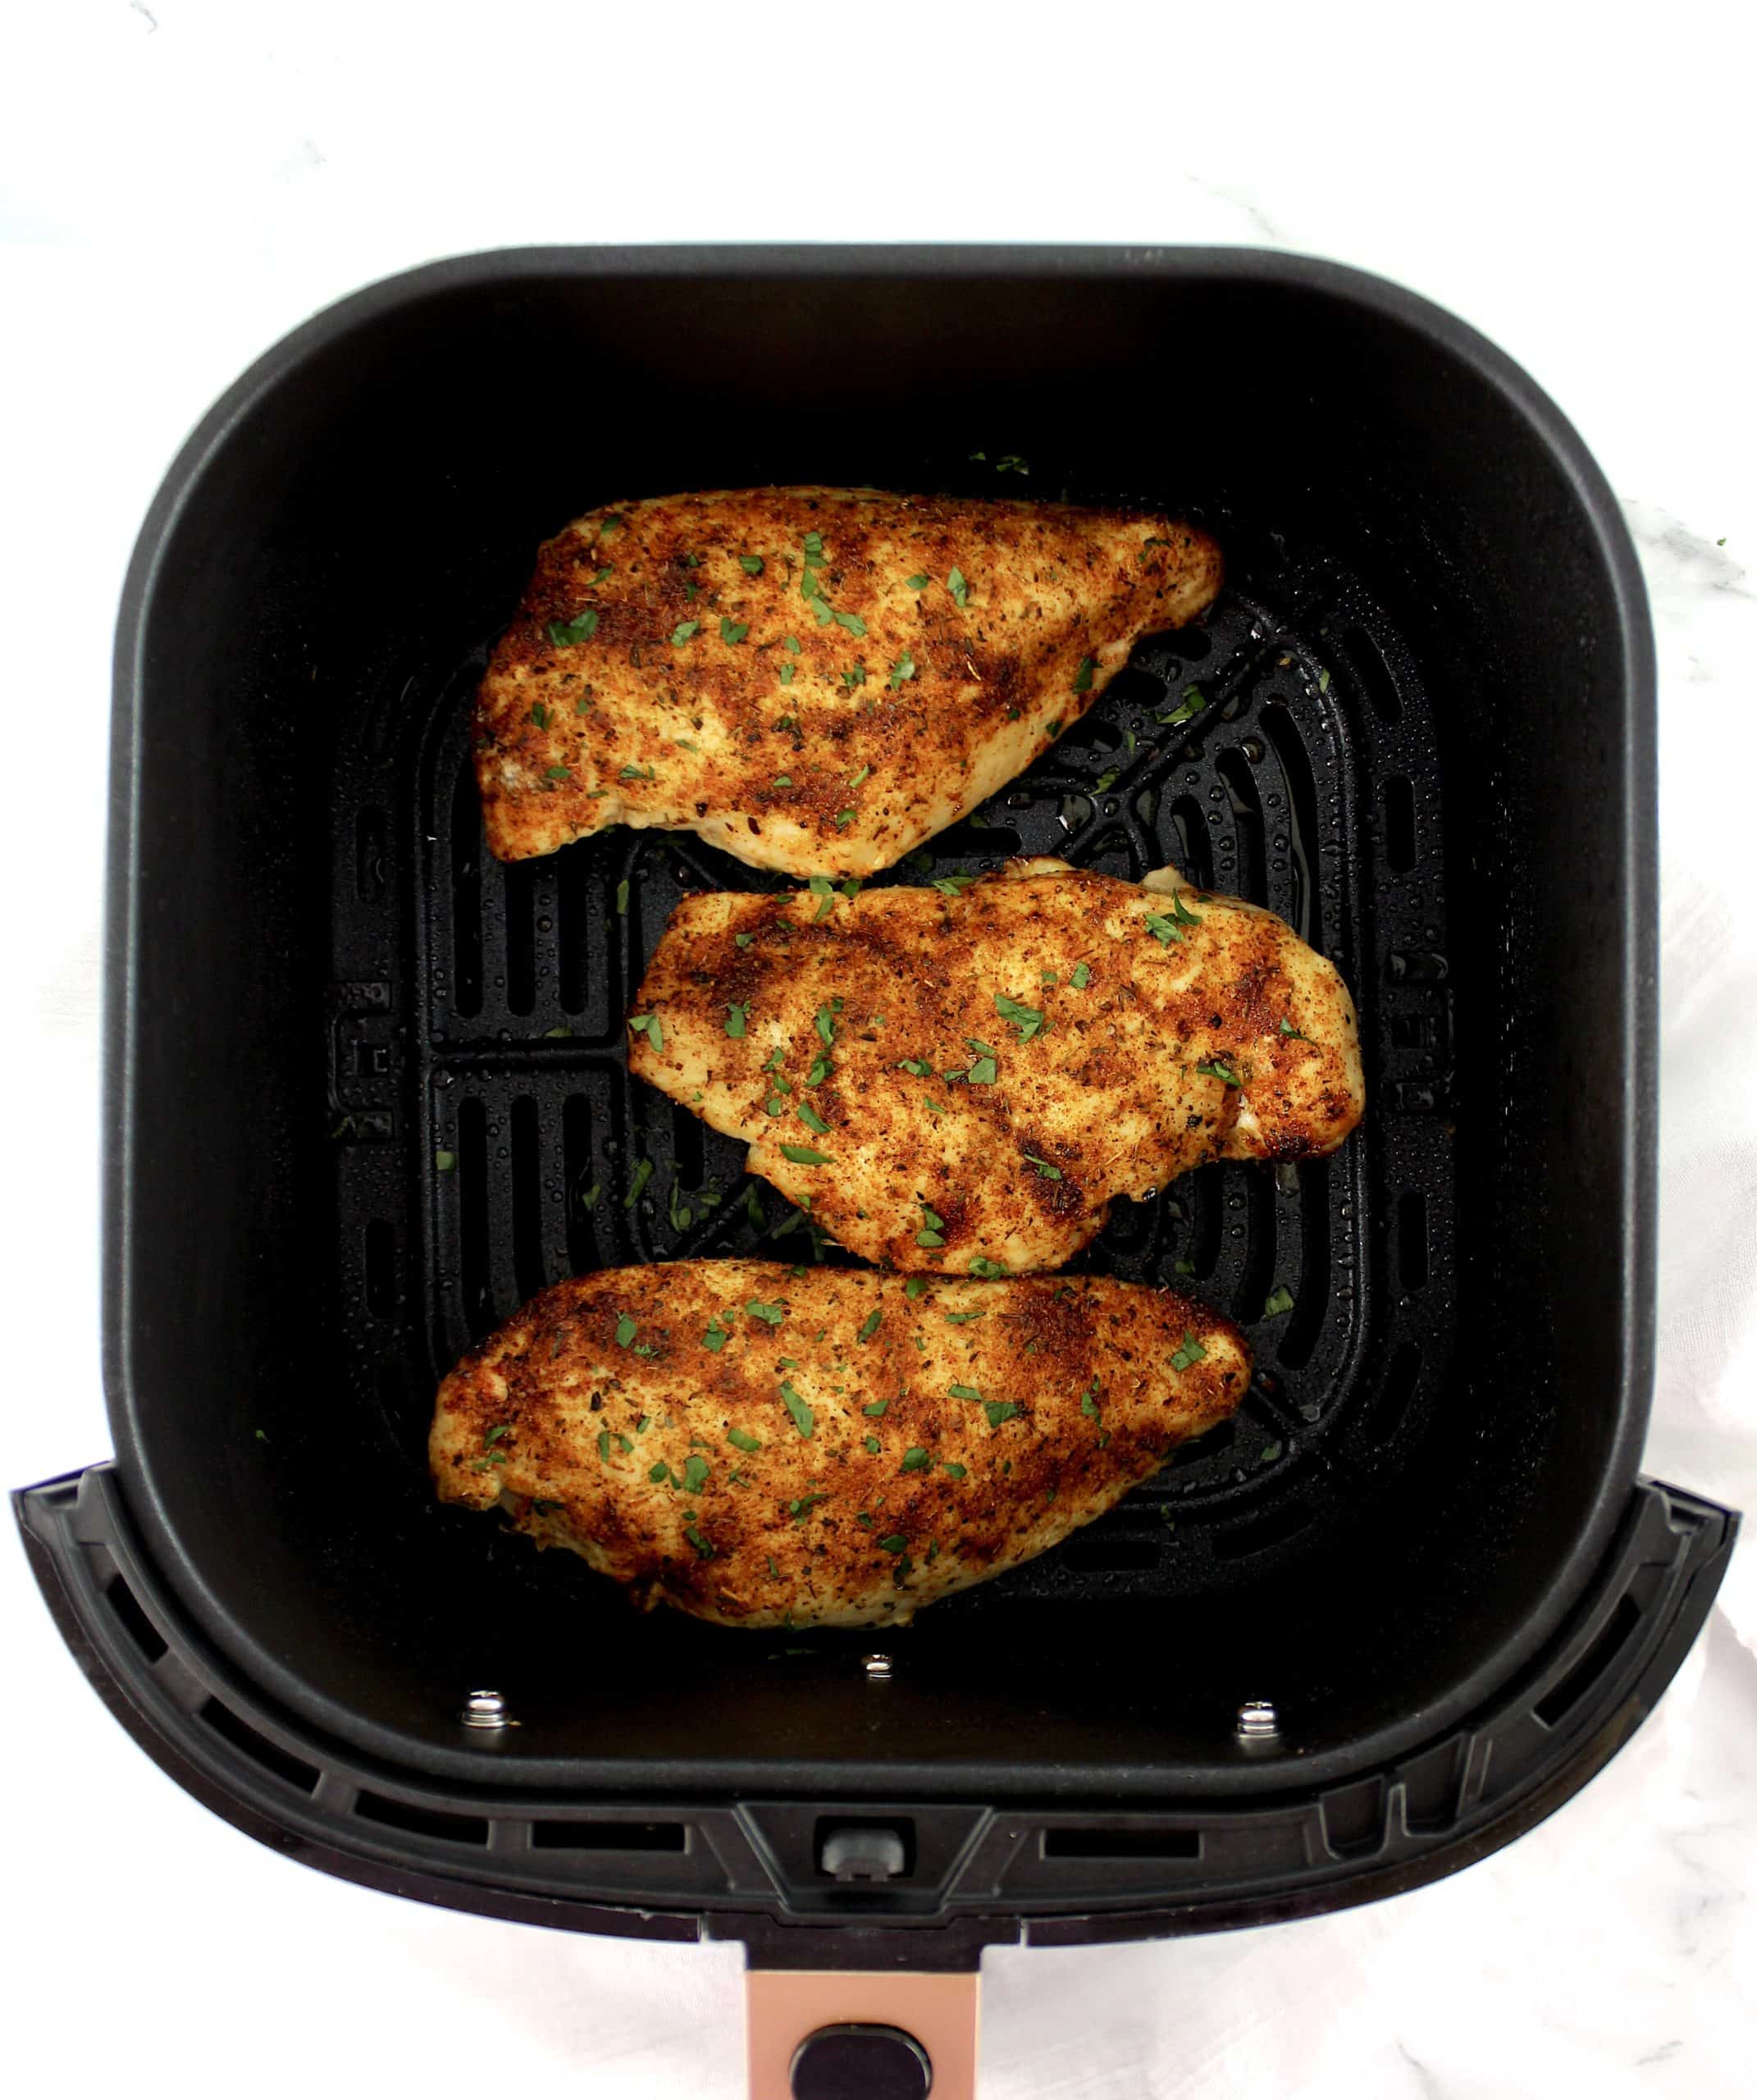 3 cooked Italian seasoned Chicken breasts in air fryer basket